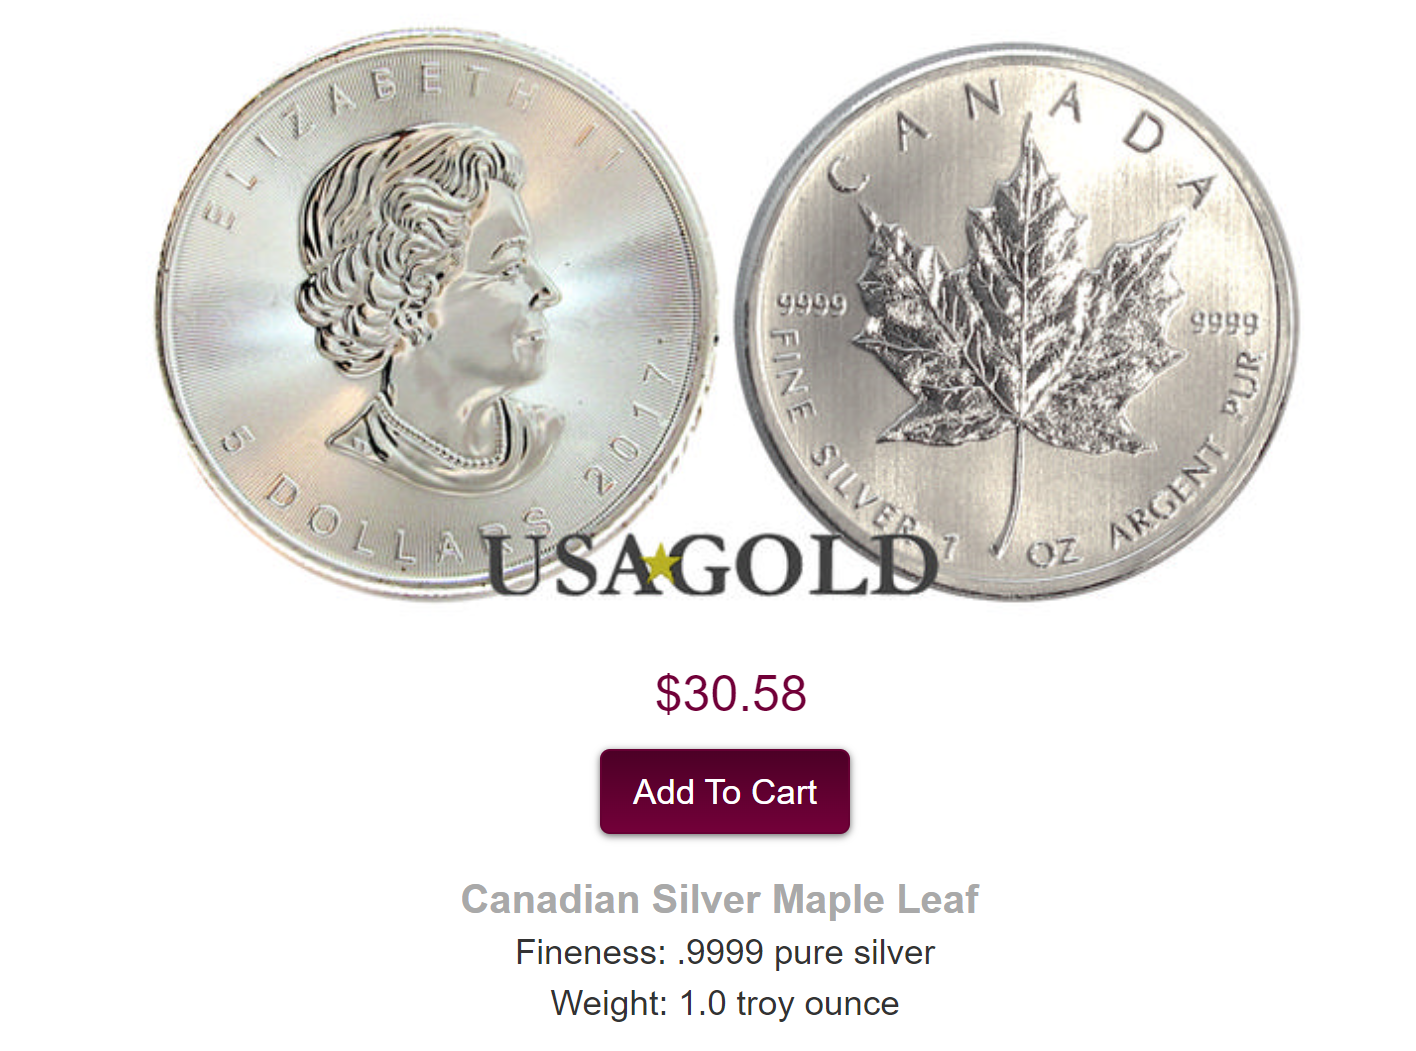 USAGOLD silver